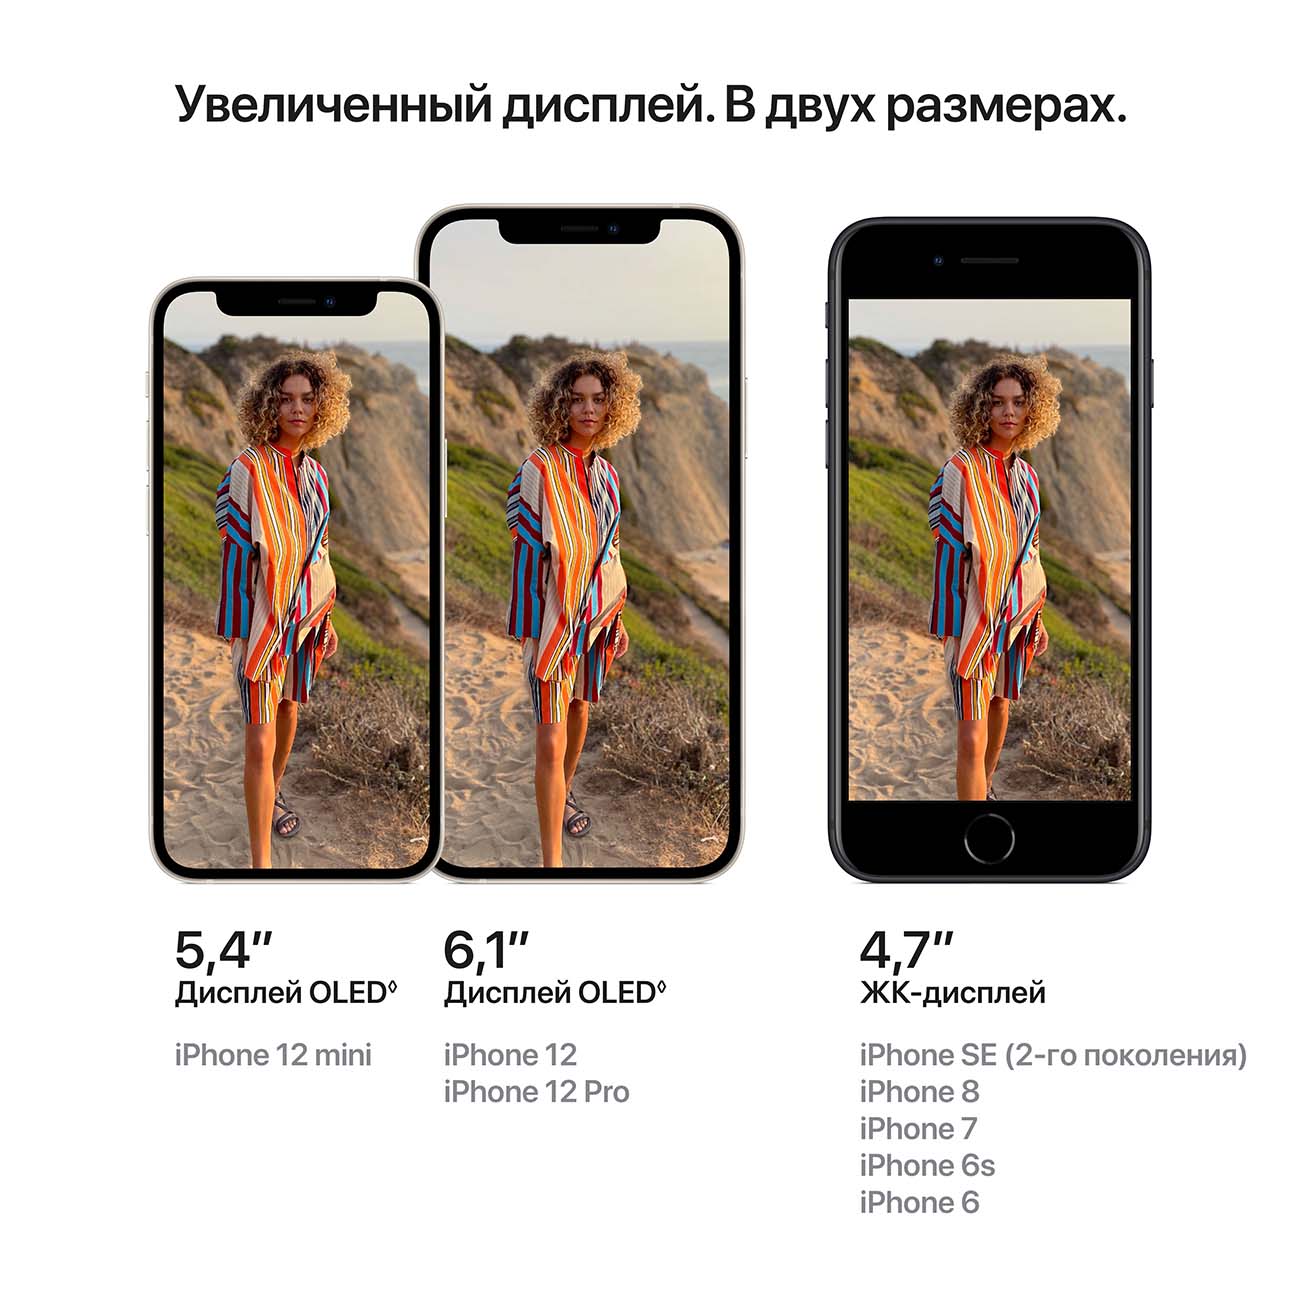 Смартфон Apple iPhone 12 mini 128GB White - купить смартфон Эпл iPhone 12  mini 128GB White, цены в интернет-магазине Эльдорадо в Москве, доставка по  РФ